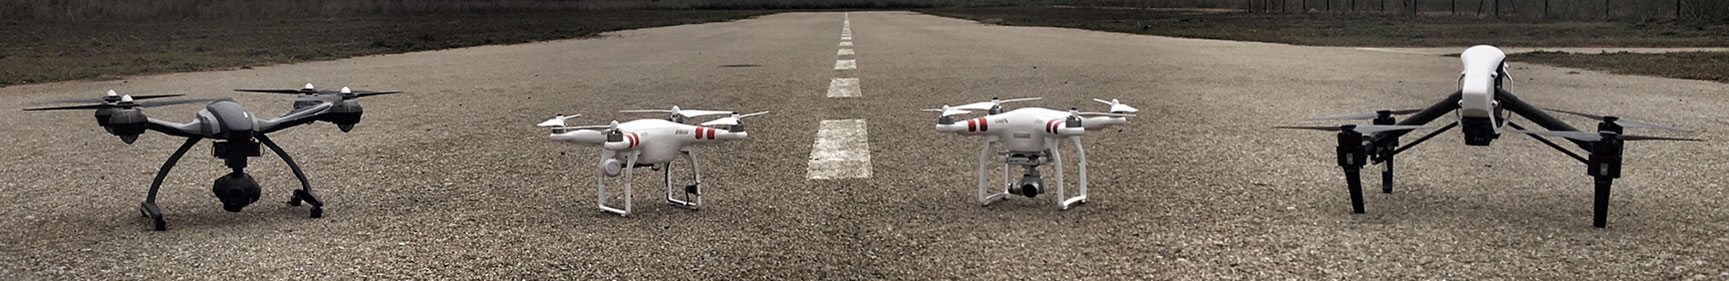 Aerbrava - Drones, RPA, UAV